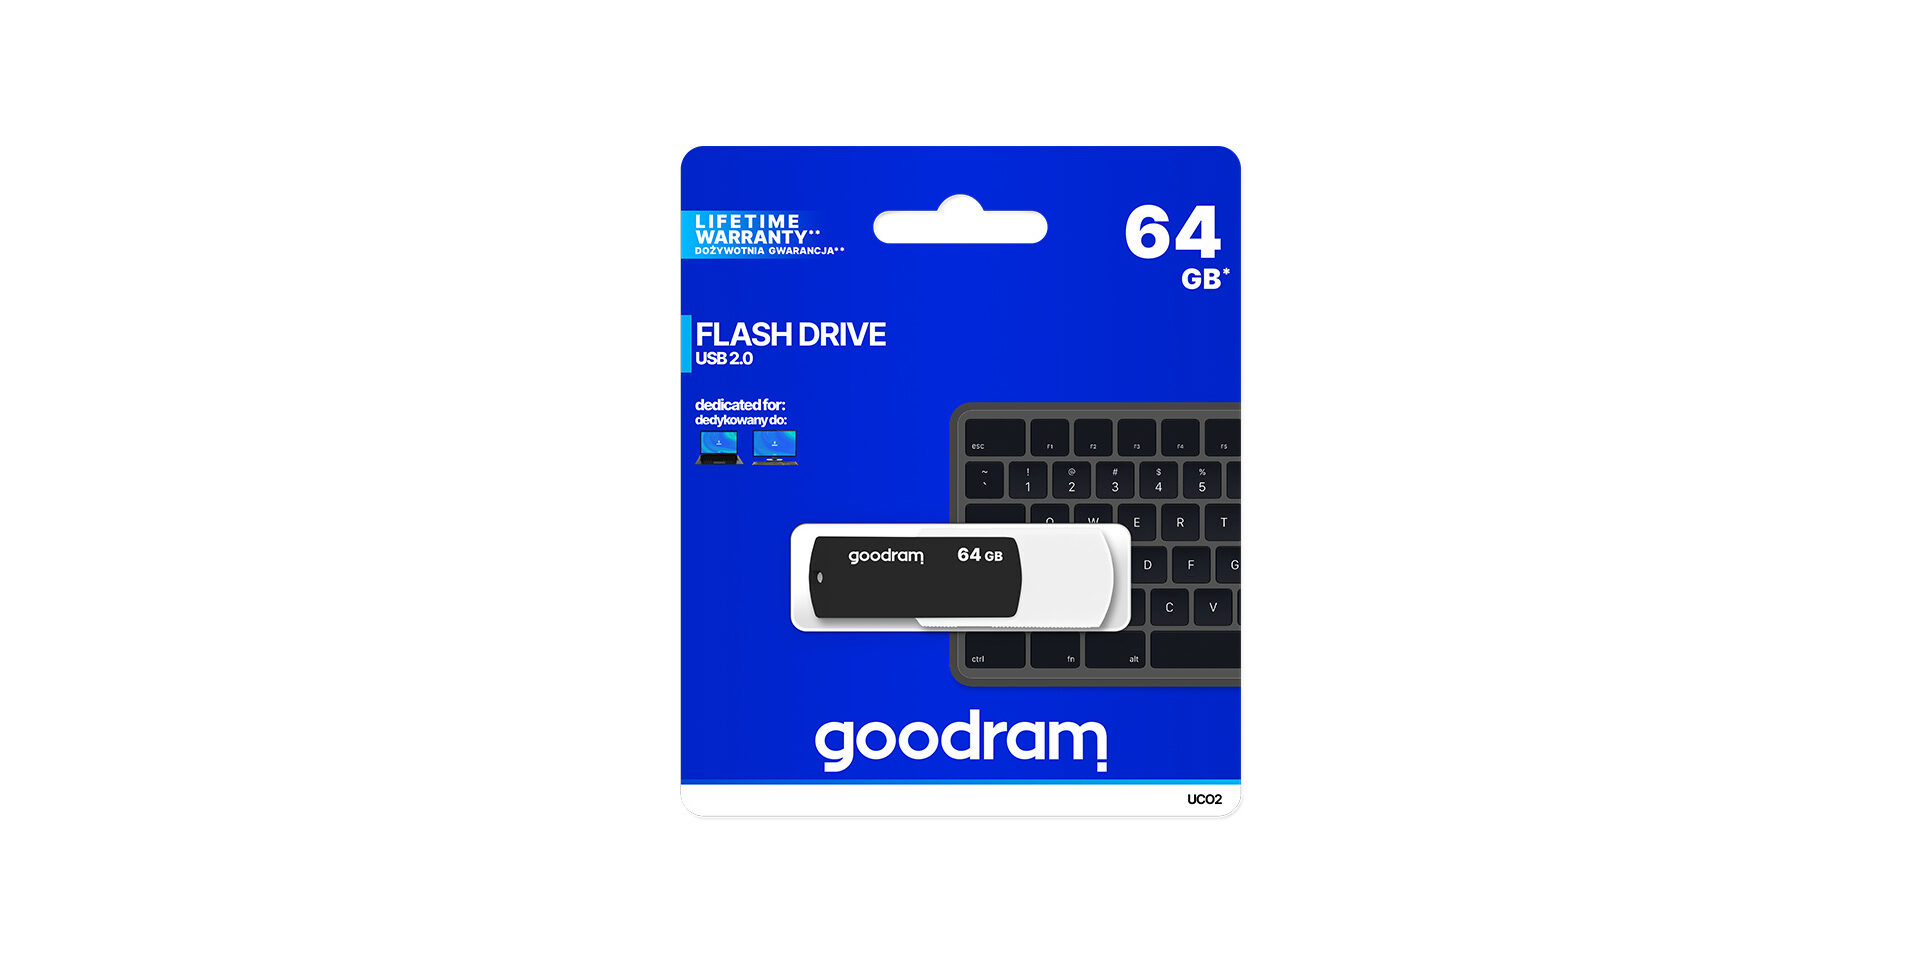 USB UCO2 marki Goodram w opakowaniu